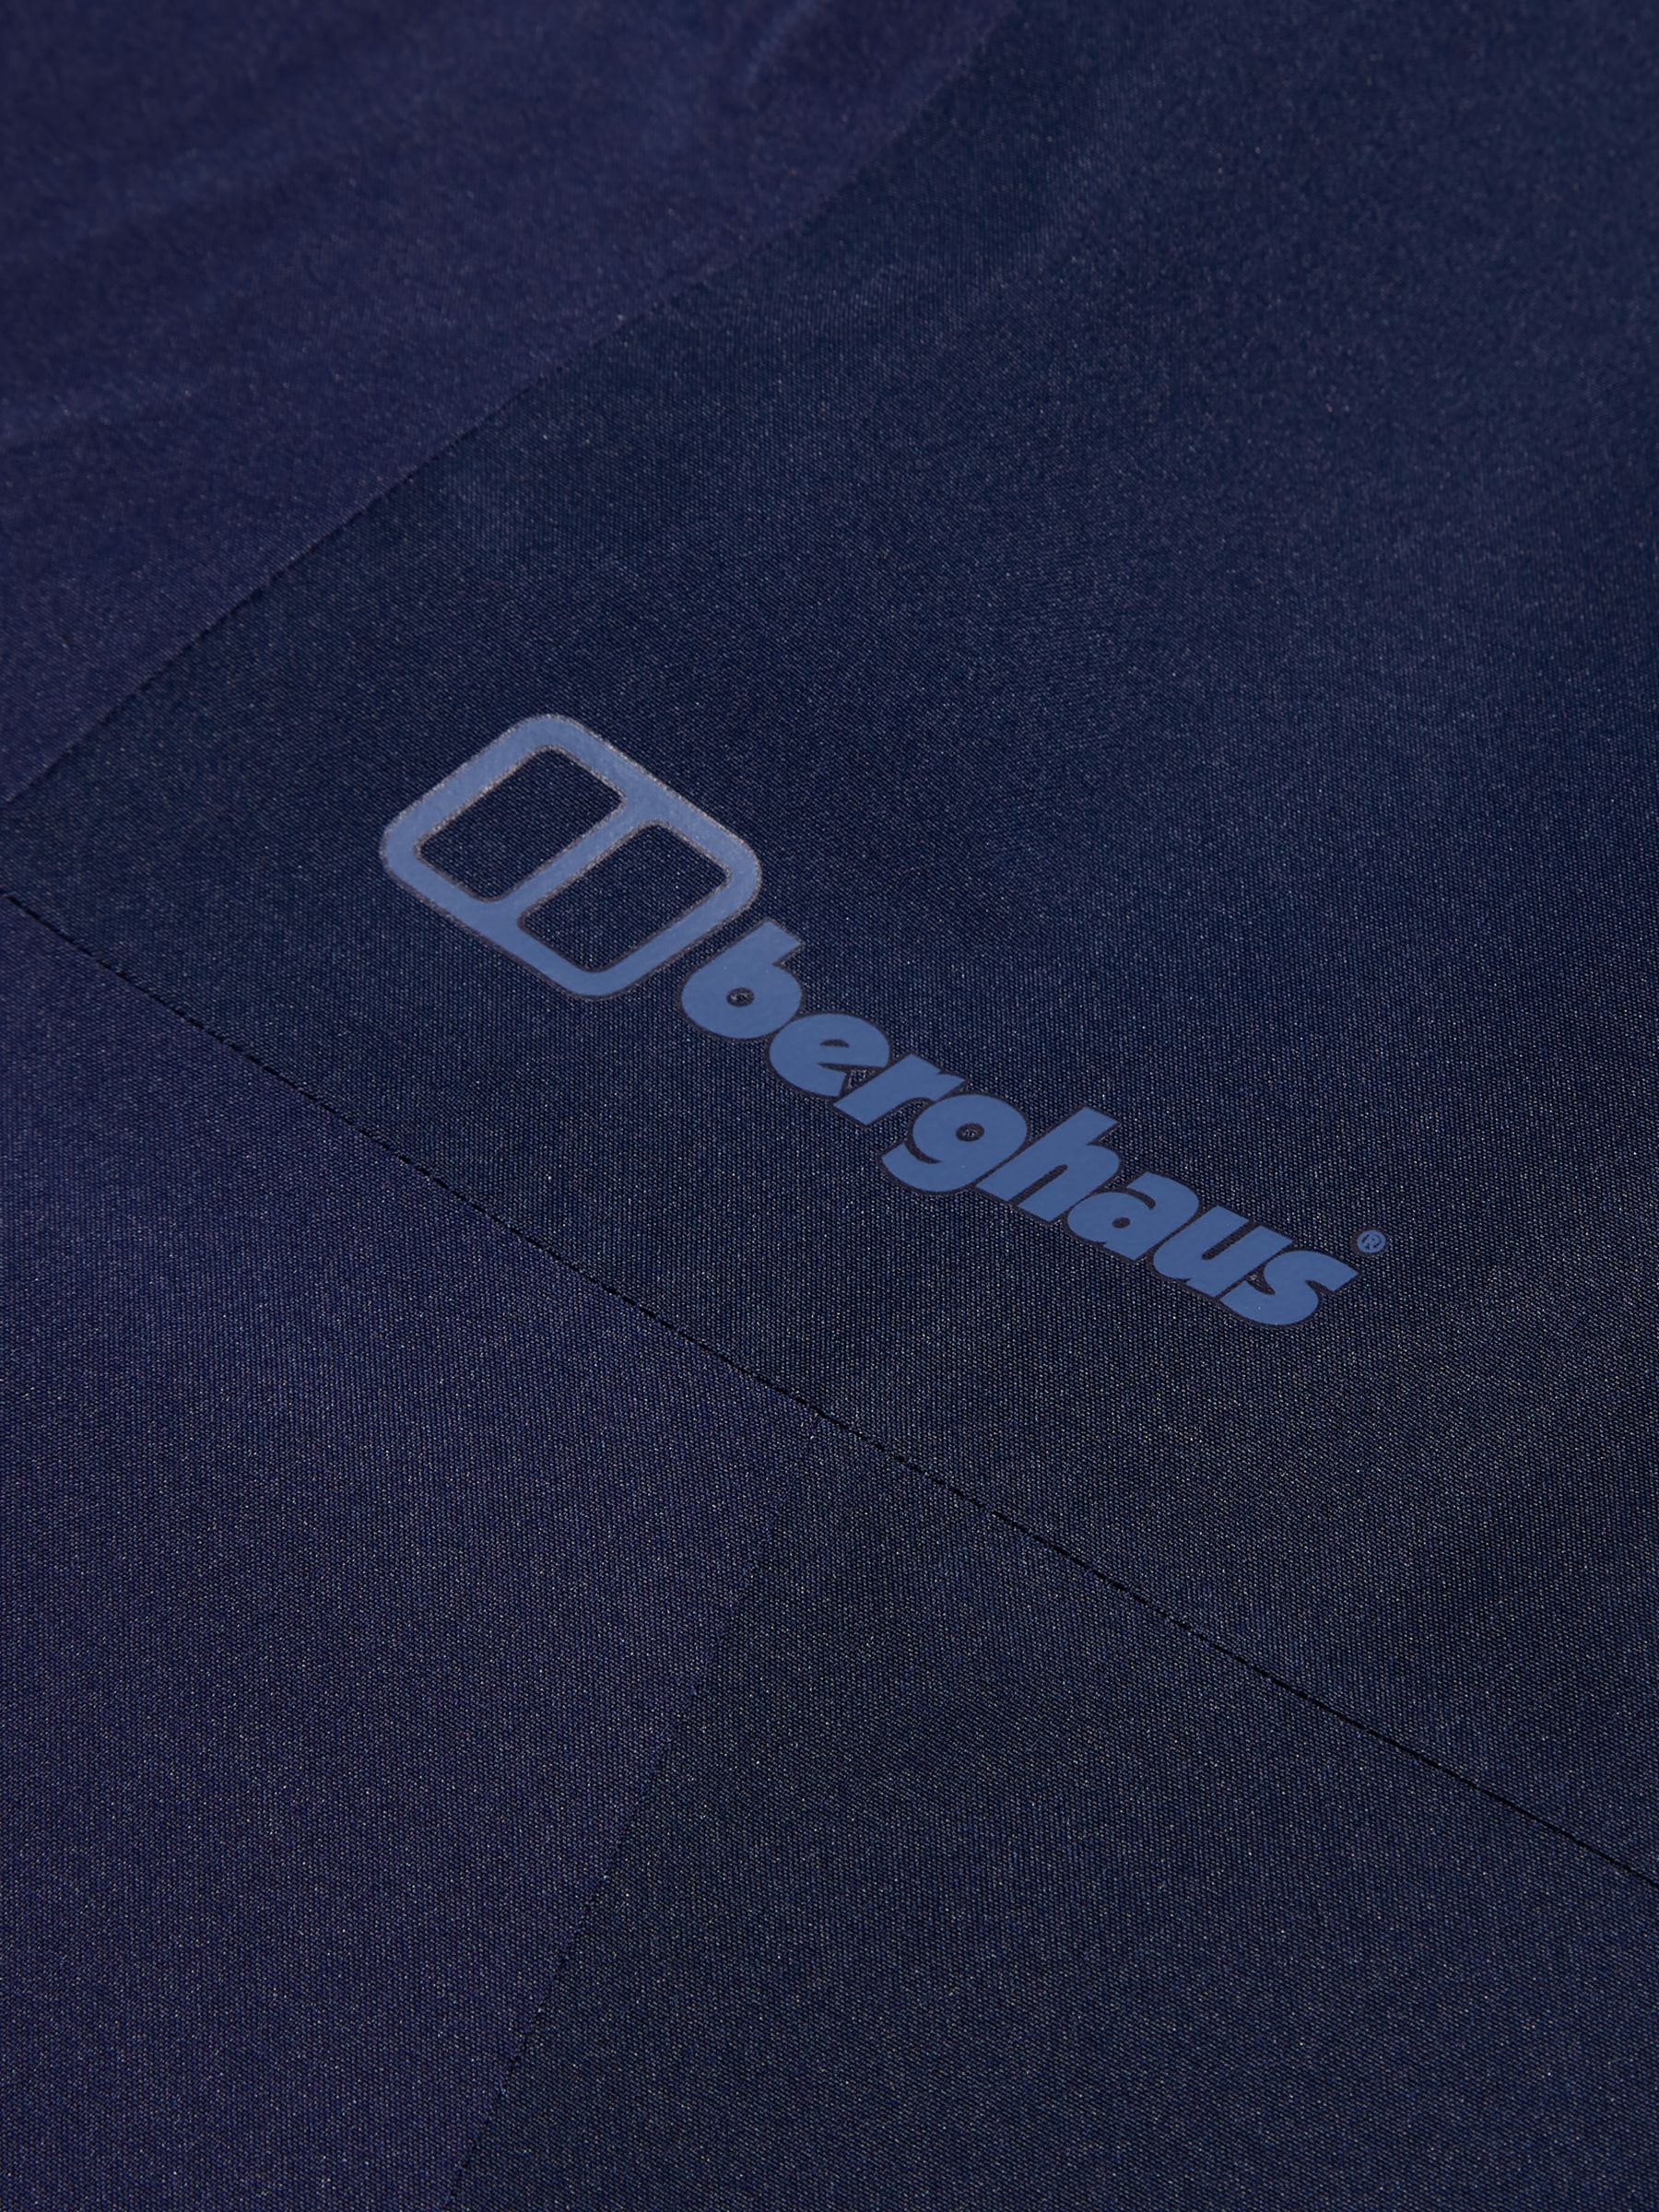 Buy Berghaus Deluge Pro 3.0 Men's Waterproof Jacket, Navy Online at johnlewis.com